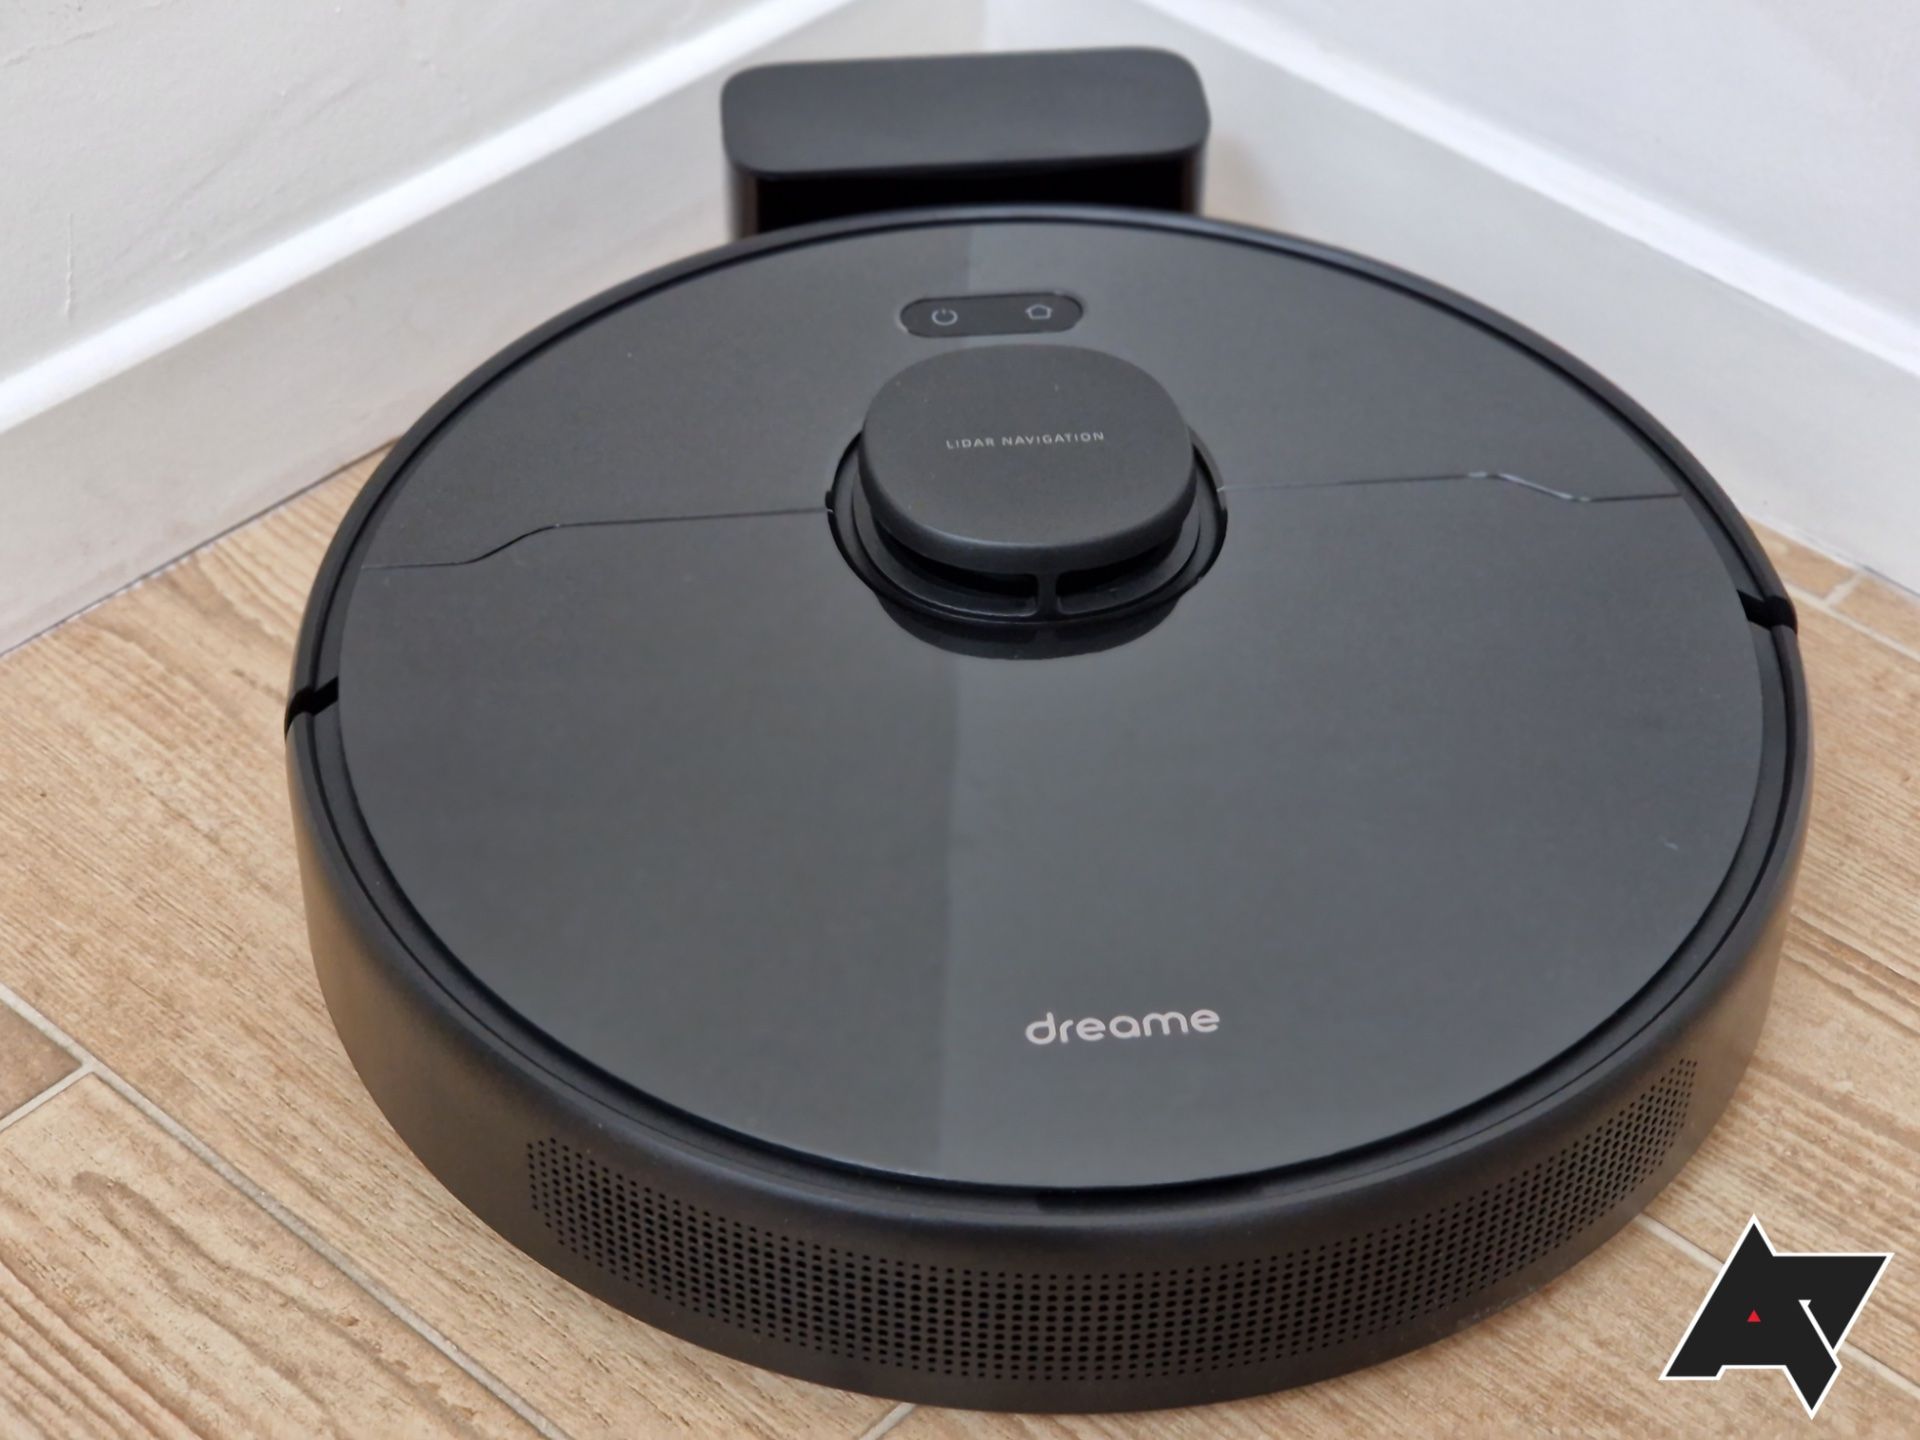 Dreametech D9 Max review: An affordable and efficient robot vacuum